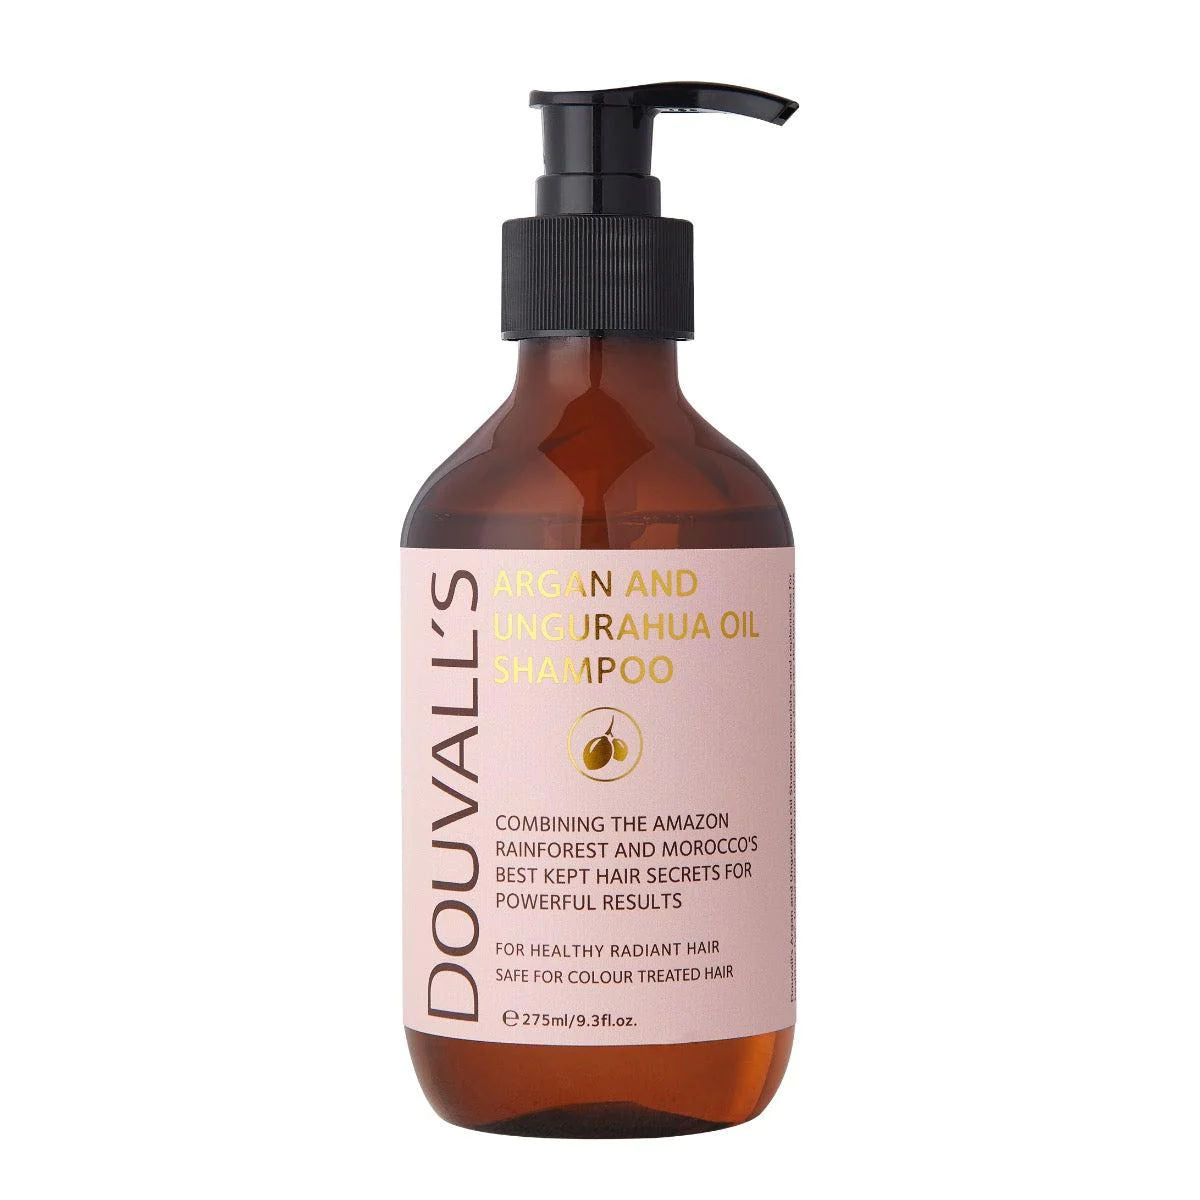 Argan and Ungurahua oil Shampoo ~ Restorative and Nourishing Hair Care